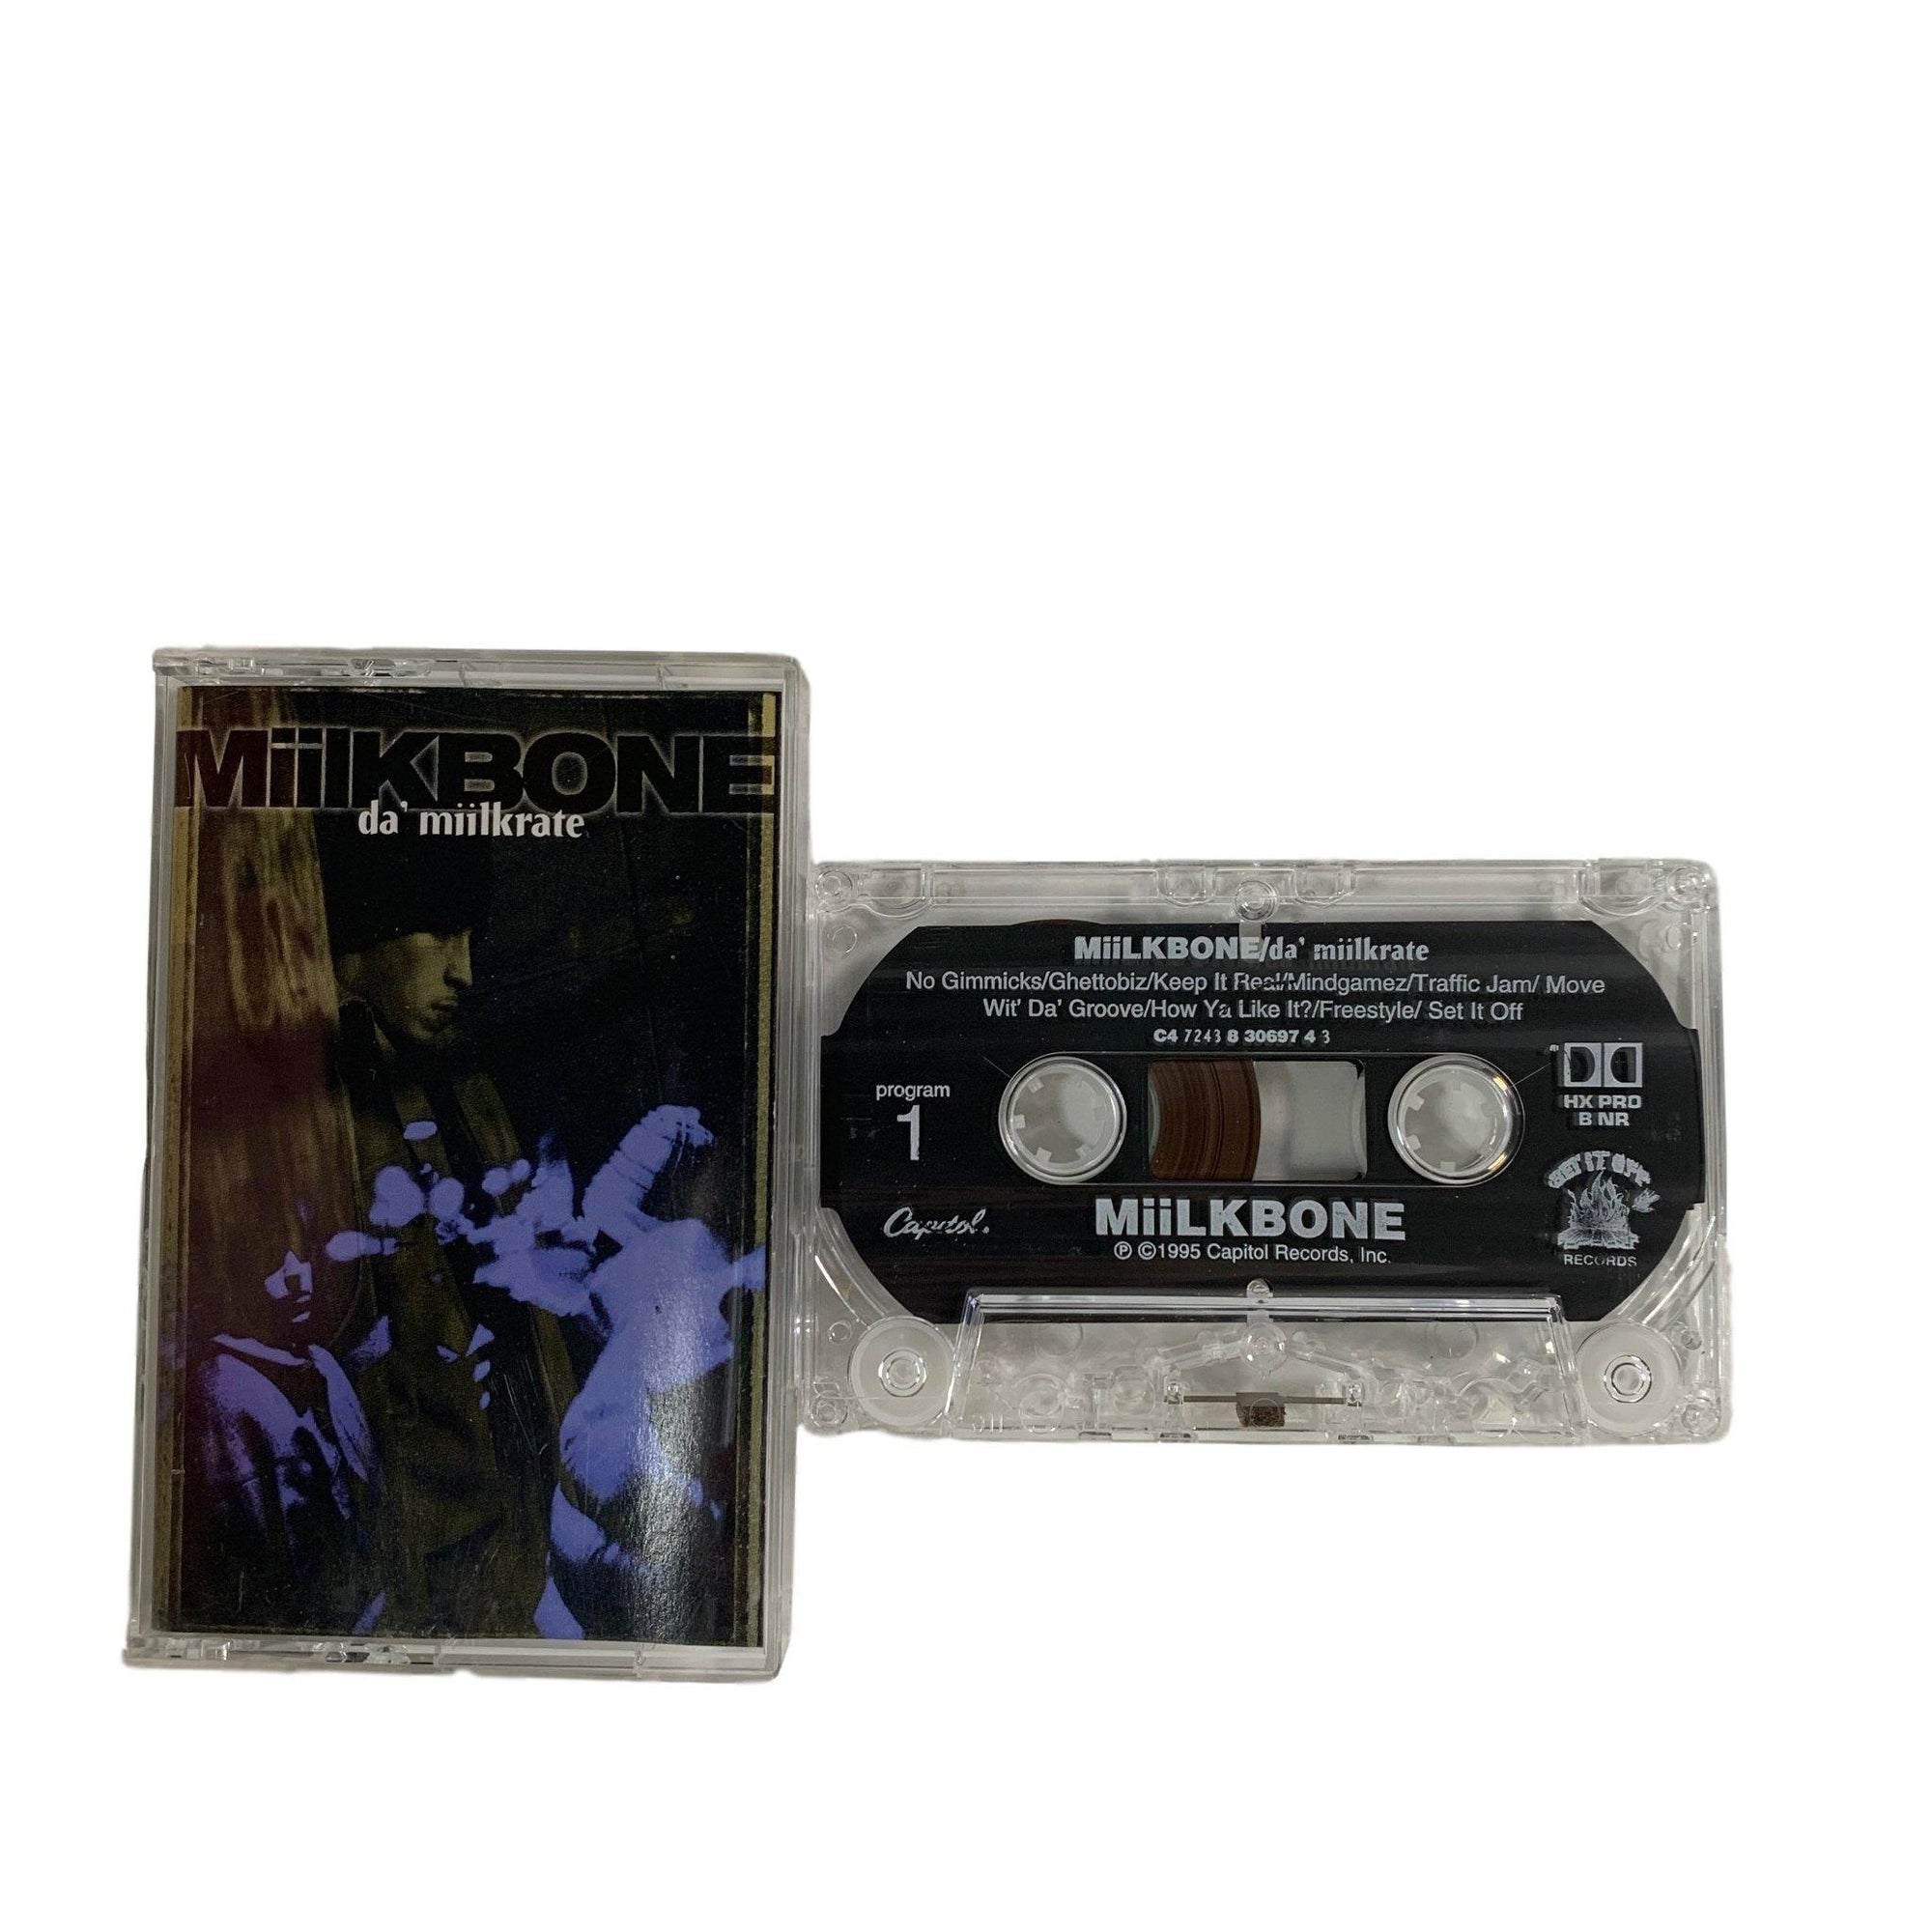 Vintage MIILKBONE "Da' miilkrate" Set It Off Records Tape - jointcustodydc